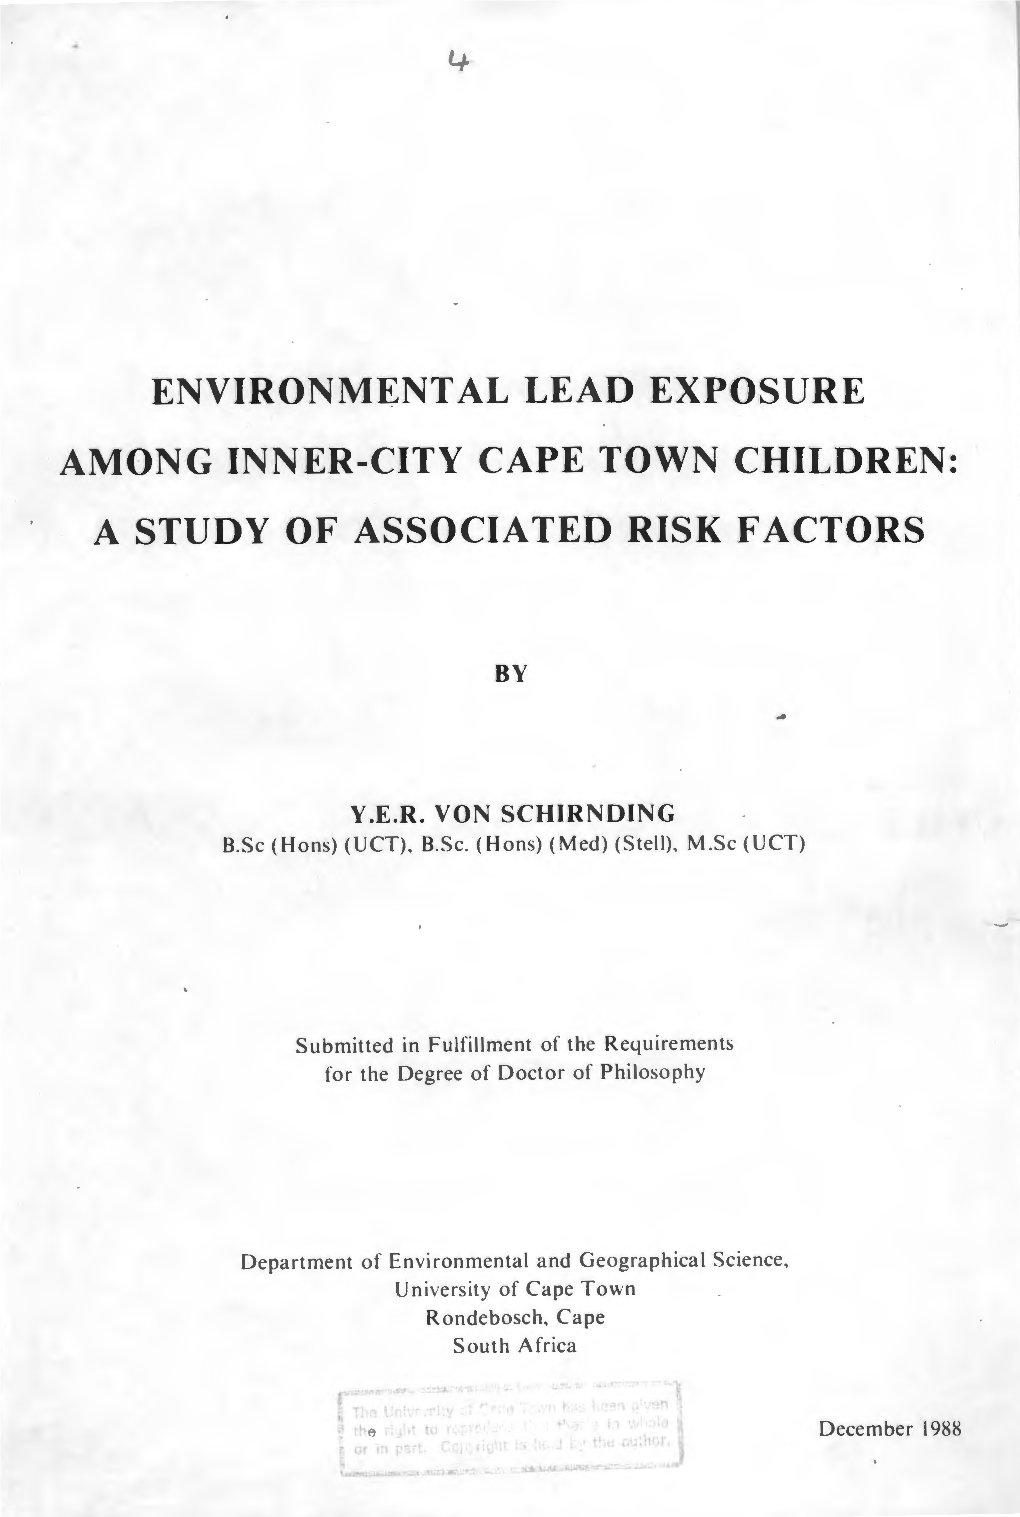 Environmental Lead Exposure Among Inner-City Cape Town Children